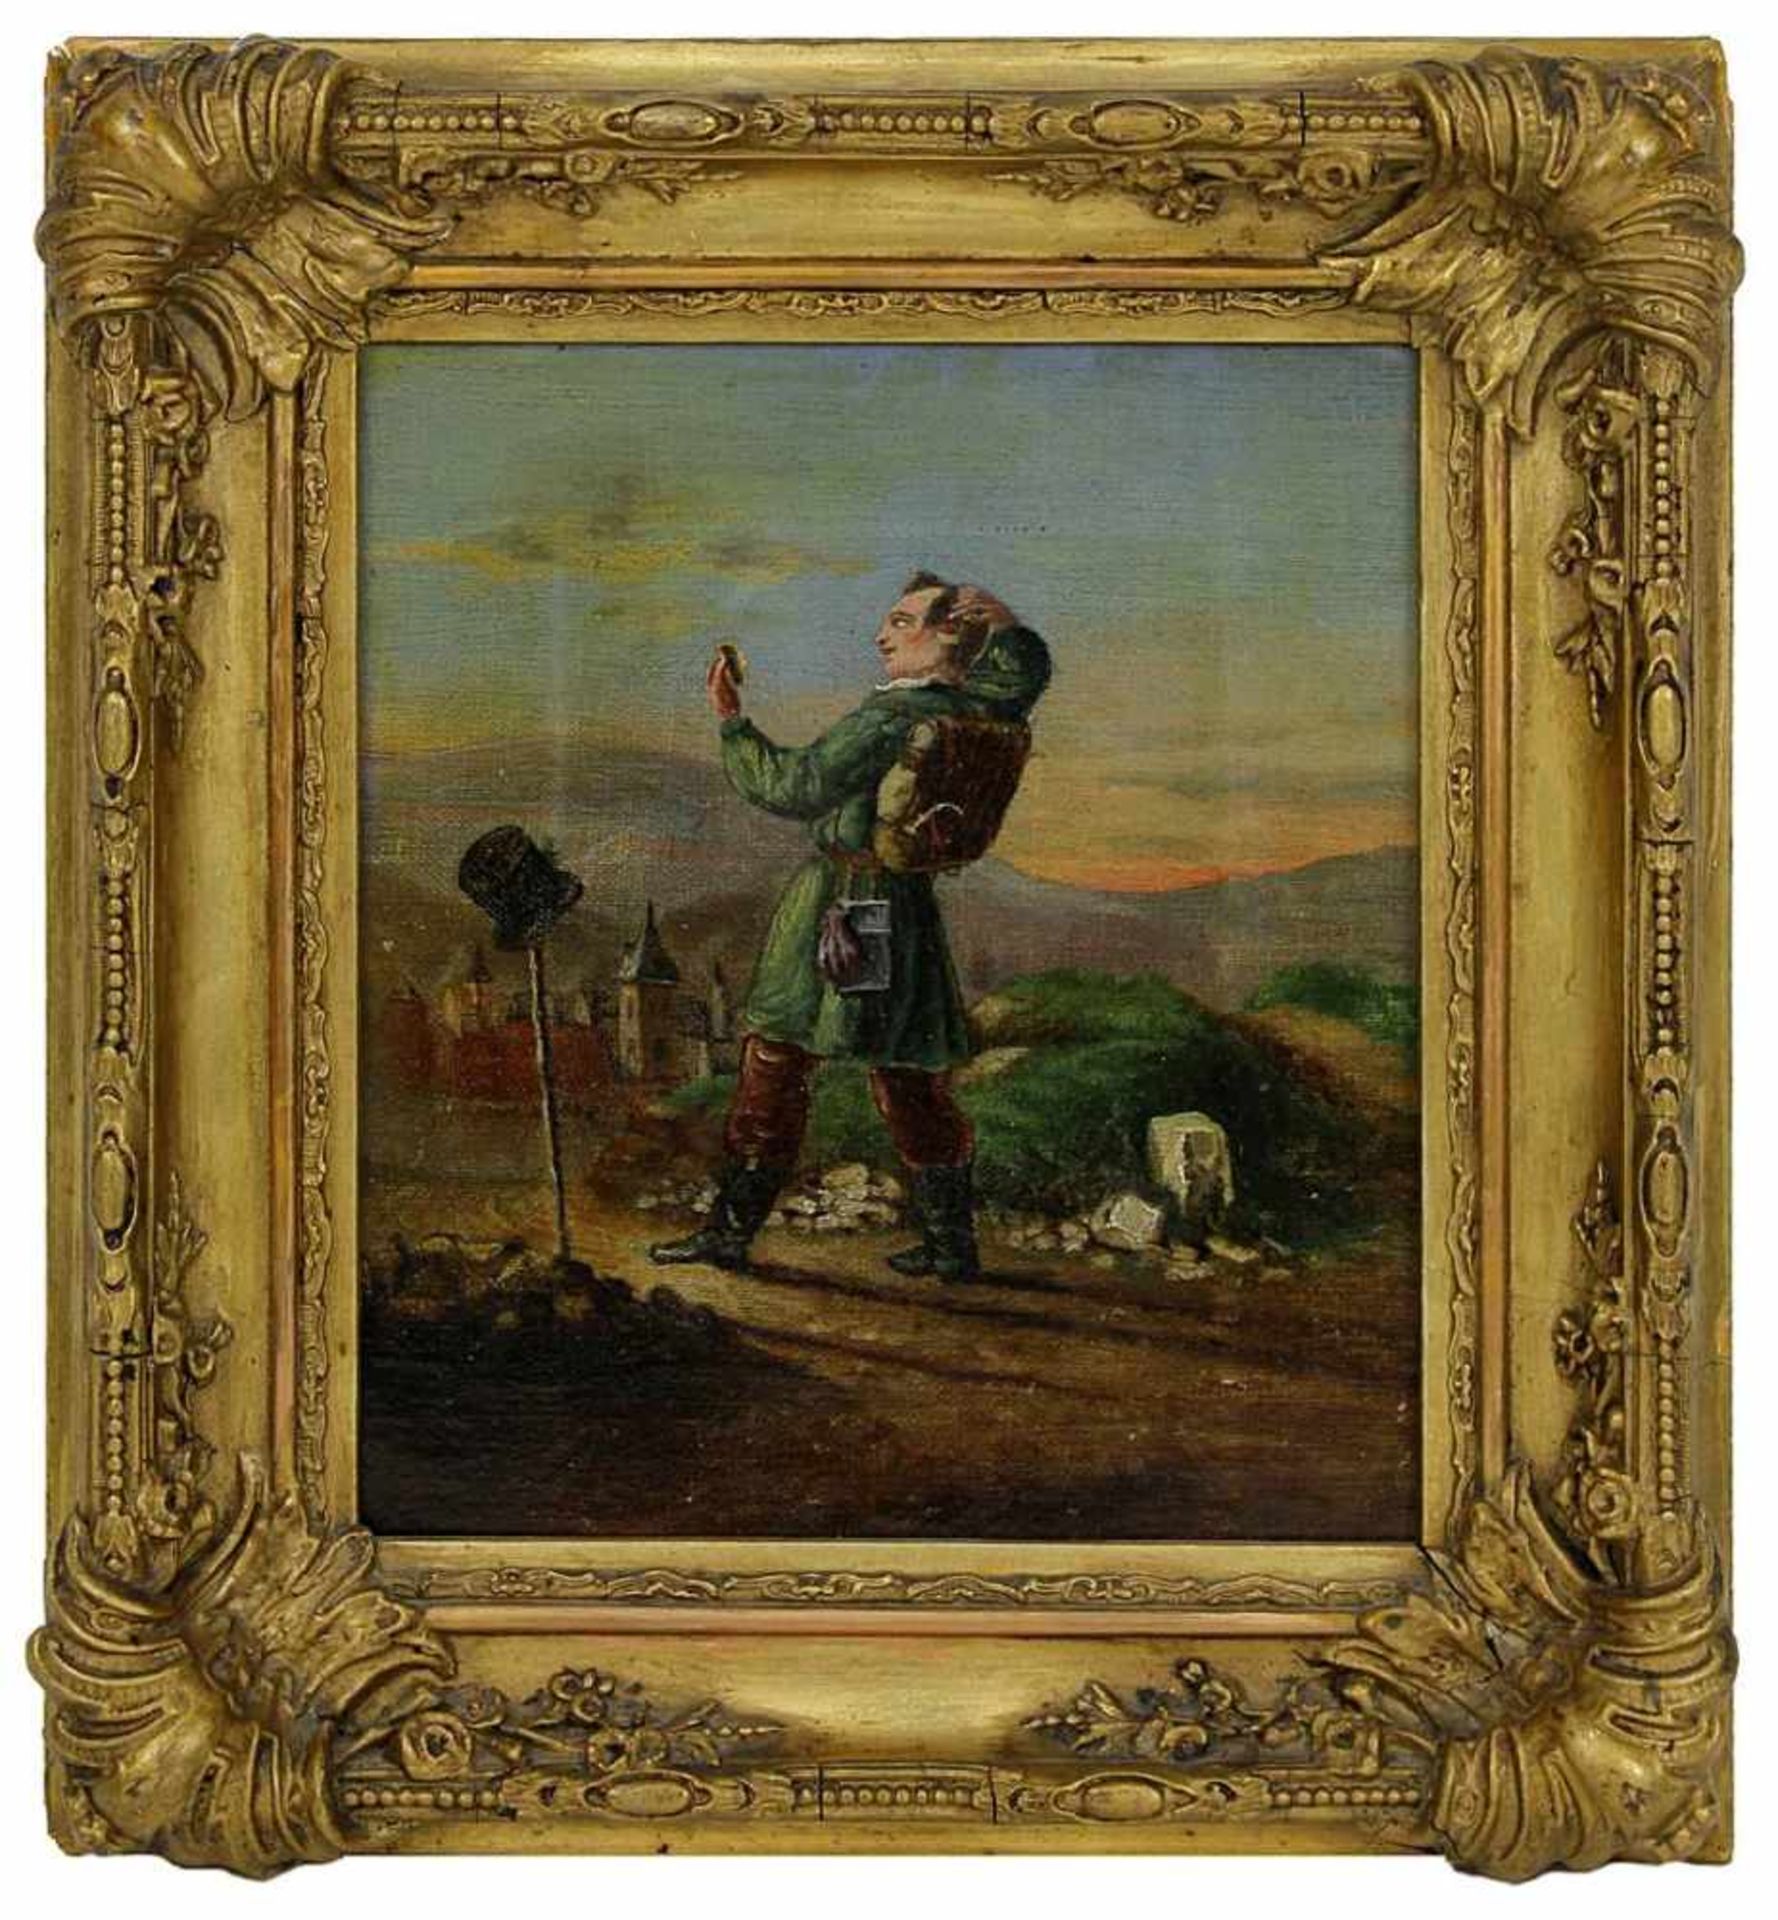 Dt. Genremaler, 19. Jh., Reisender bei Ankunft vor Dorf, Öl auf Leinwand,  Bildmaß:  20 cm x 23